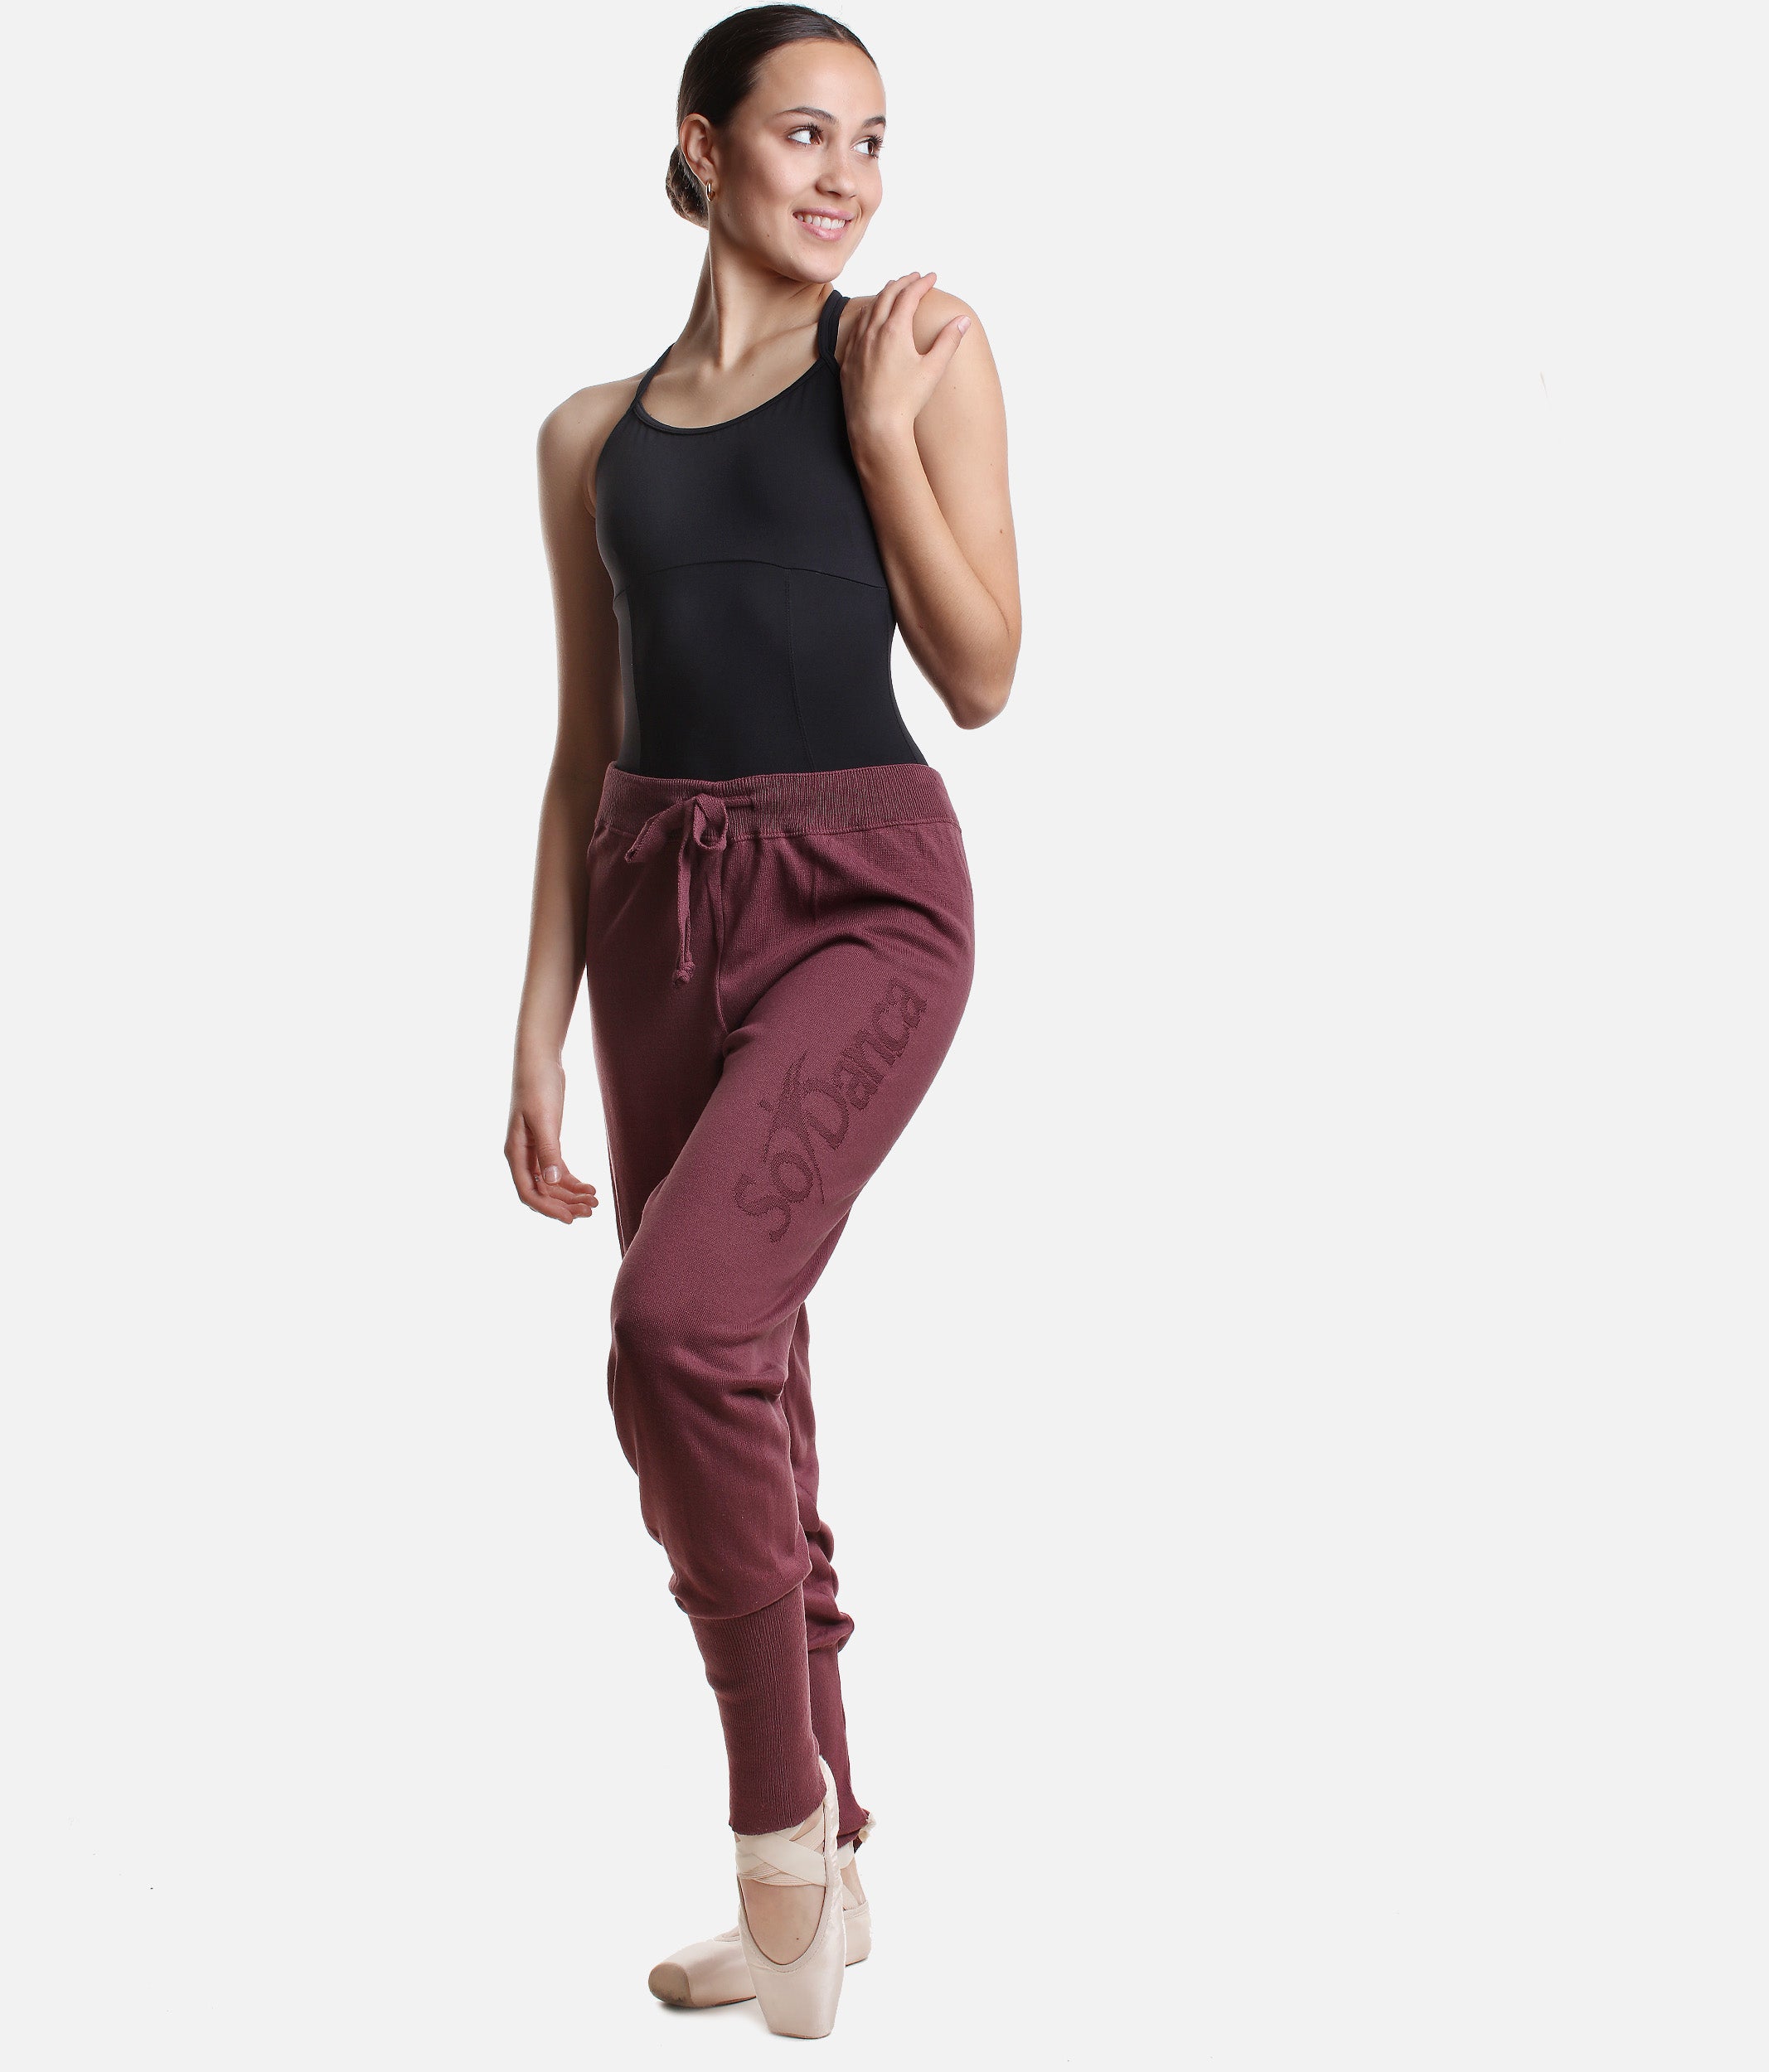 Intermezzo - Ladies Ballet Warm-up pants long 5161 Pansurbi